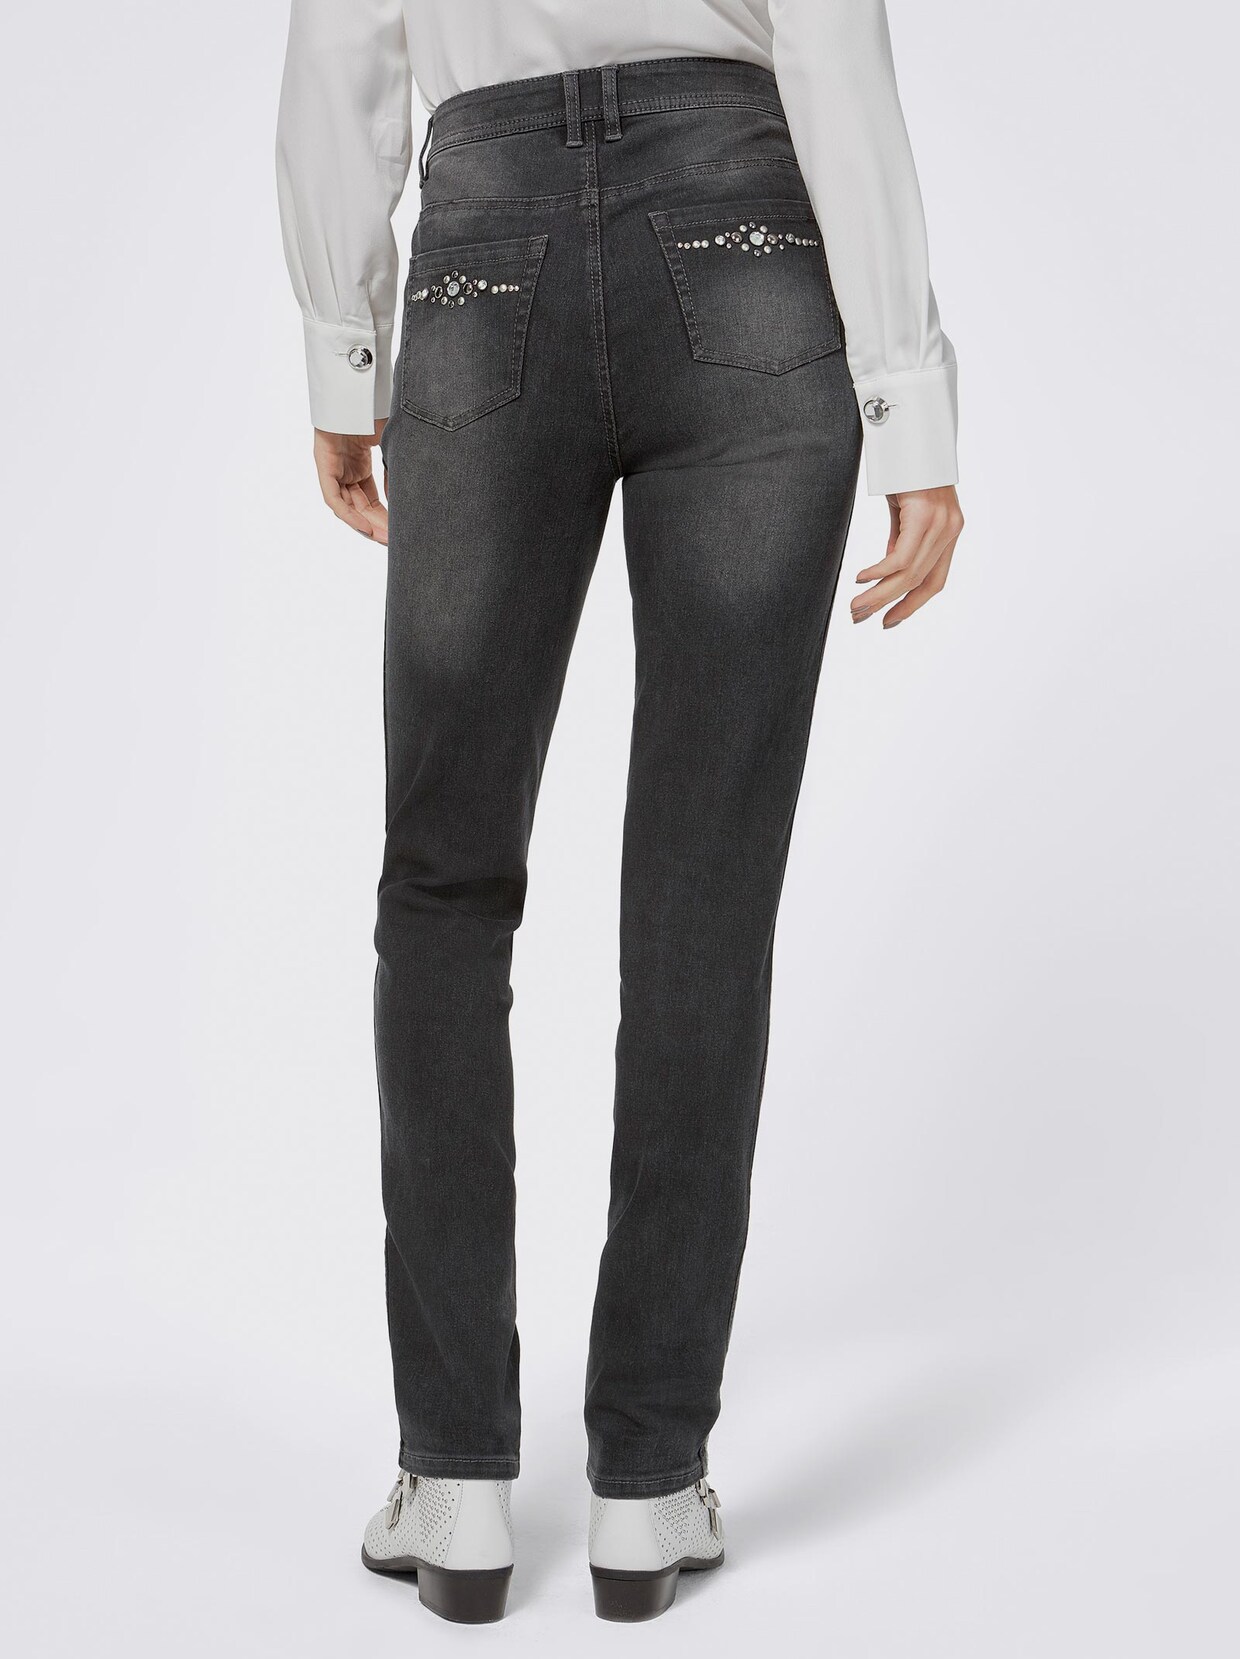 Baumwoll-Modal-Jeans - dark grey-denim